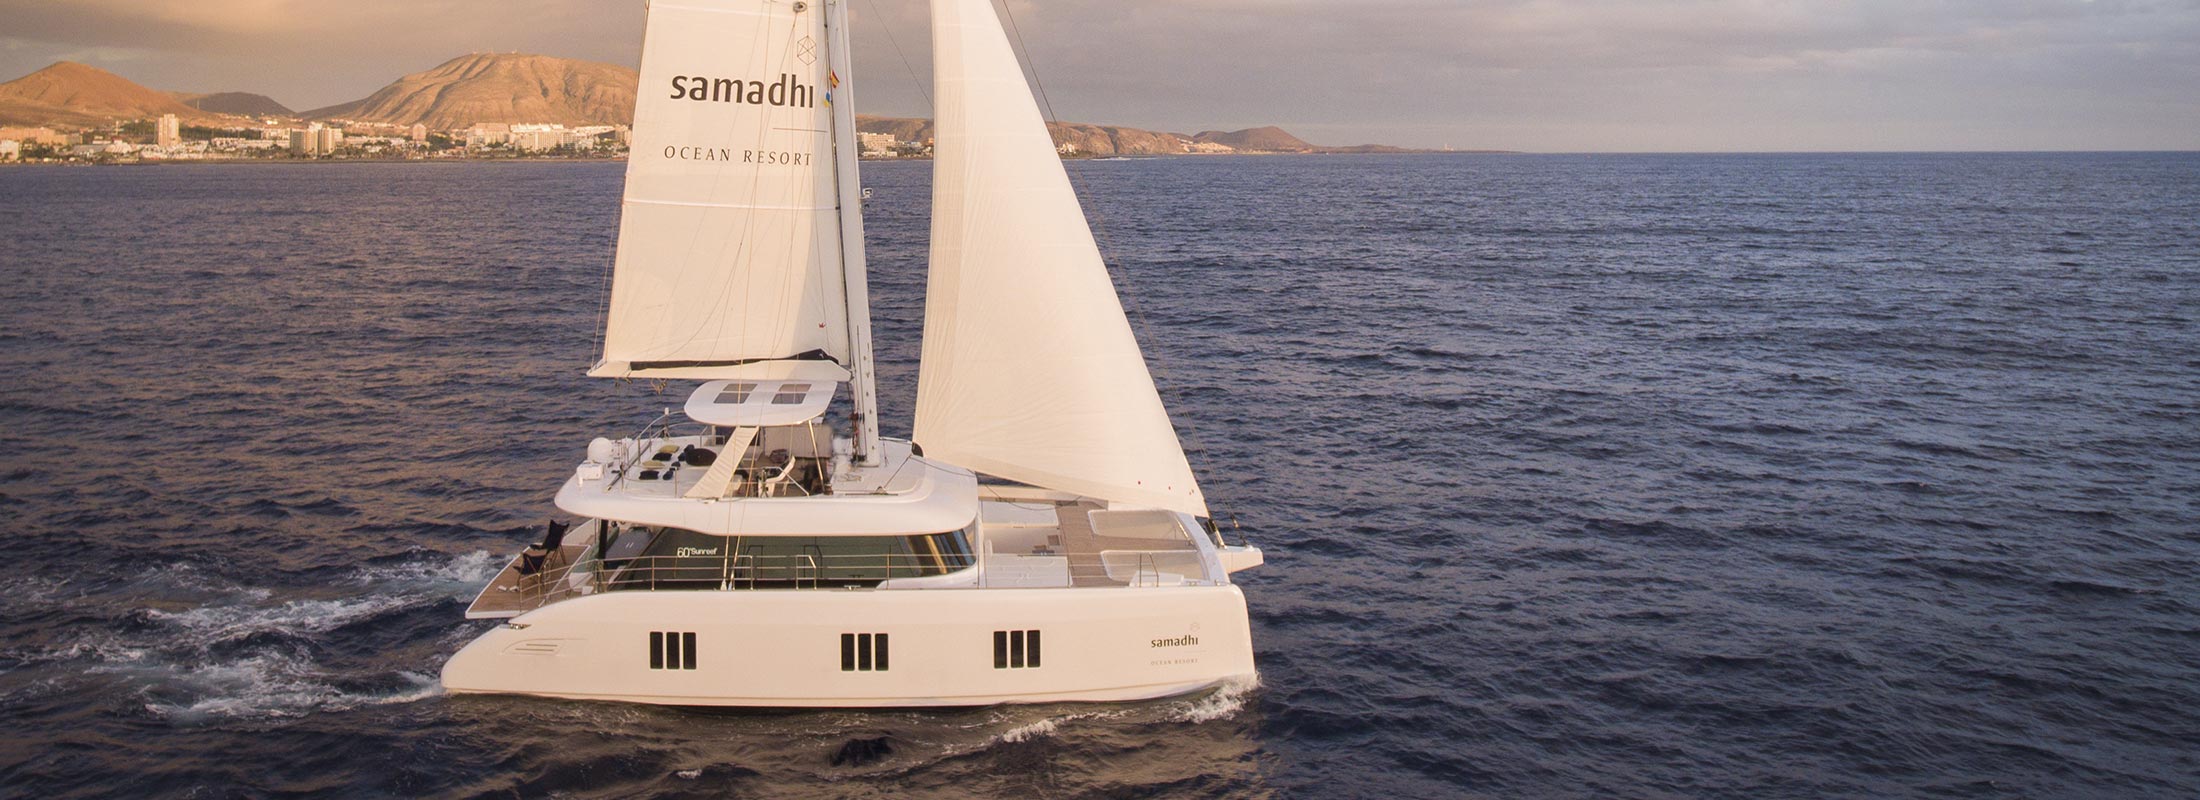 Samadhi-sailing-catamaran-charter-a-yacht-slider-1.jpg